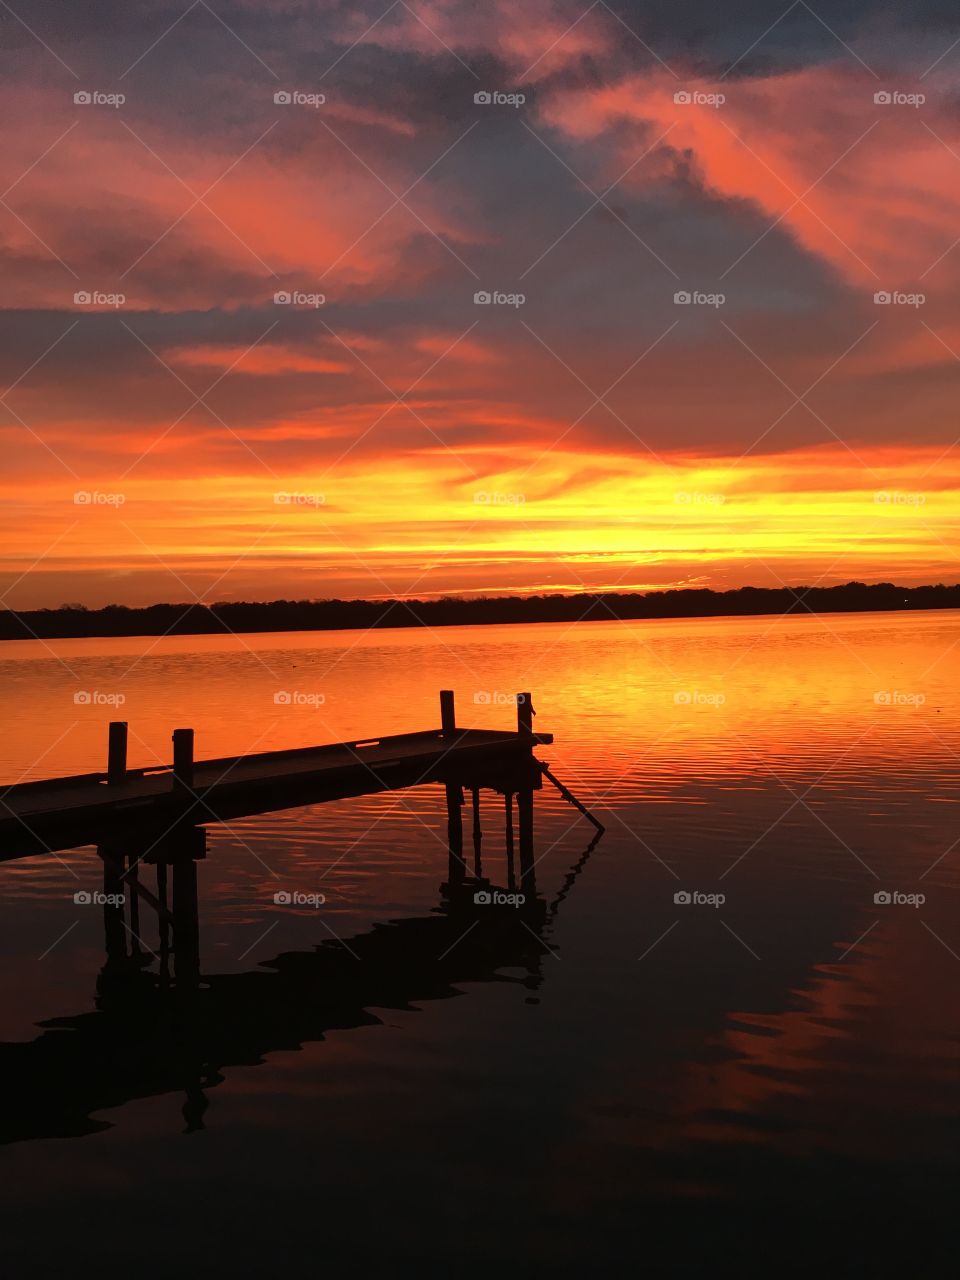 Reflection of sunset over lake